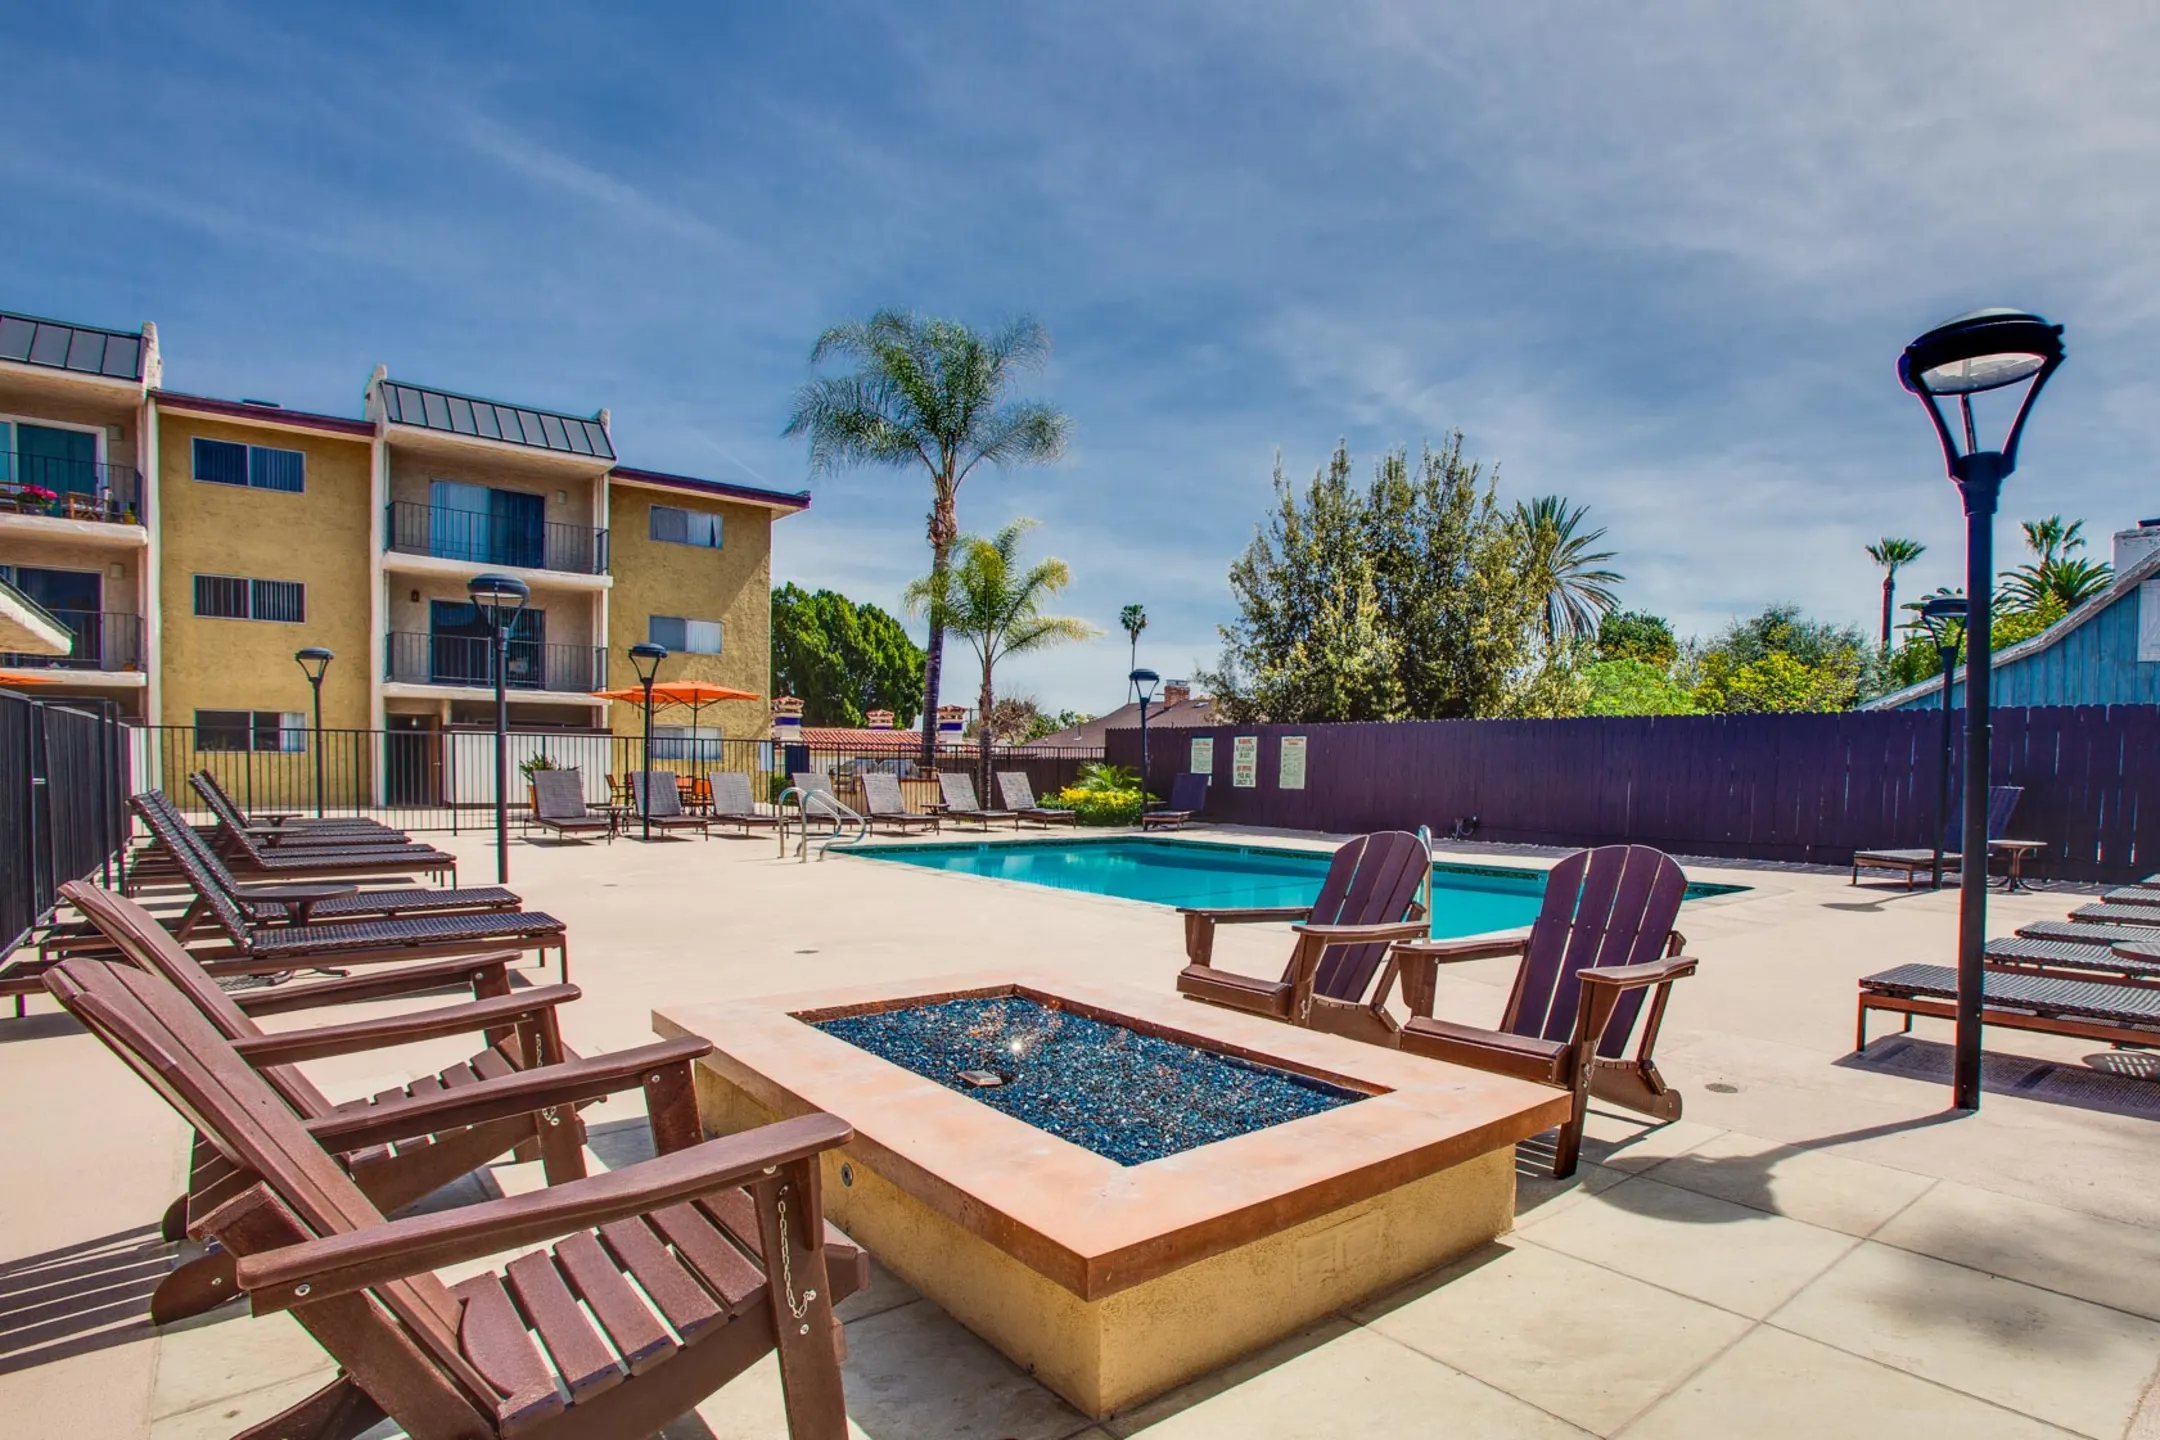 Pool - Villas of Pasadena Apartment Homes - Pasadena, CA